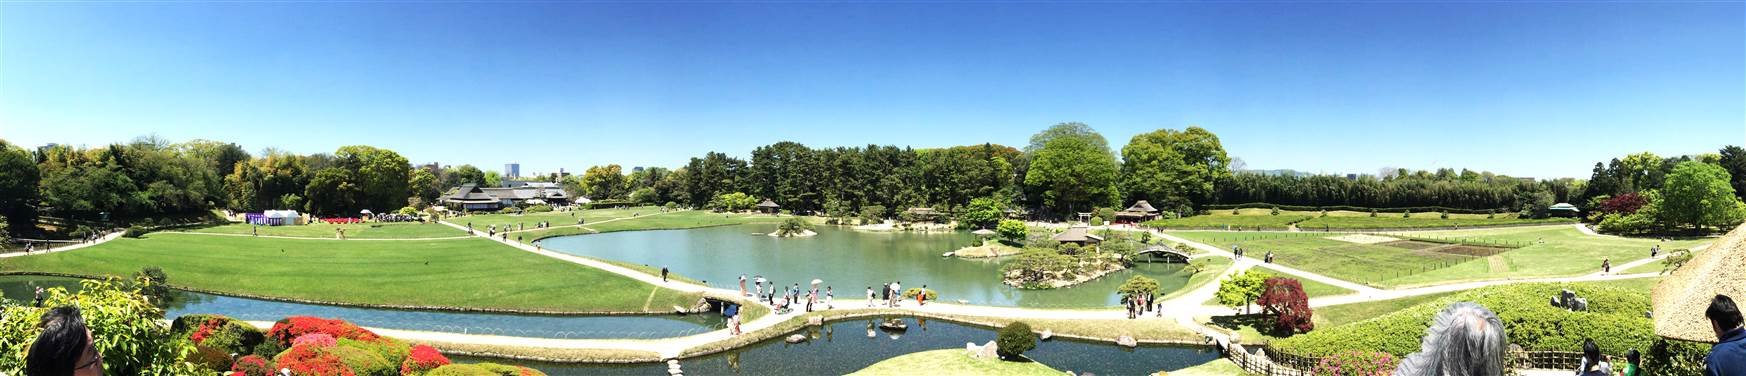 Panaroma vườn cảnh Okayama Korakuen. Photo Samgoshare